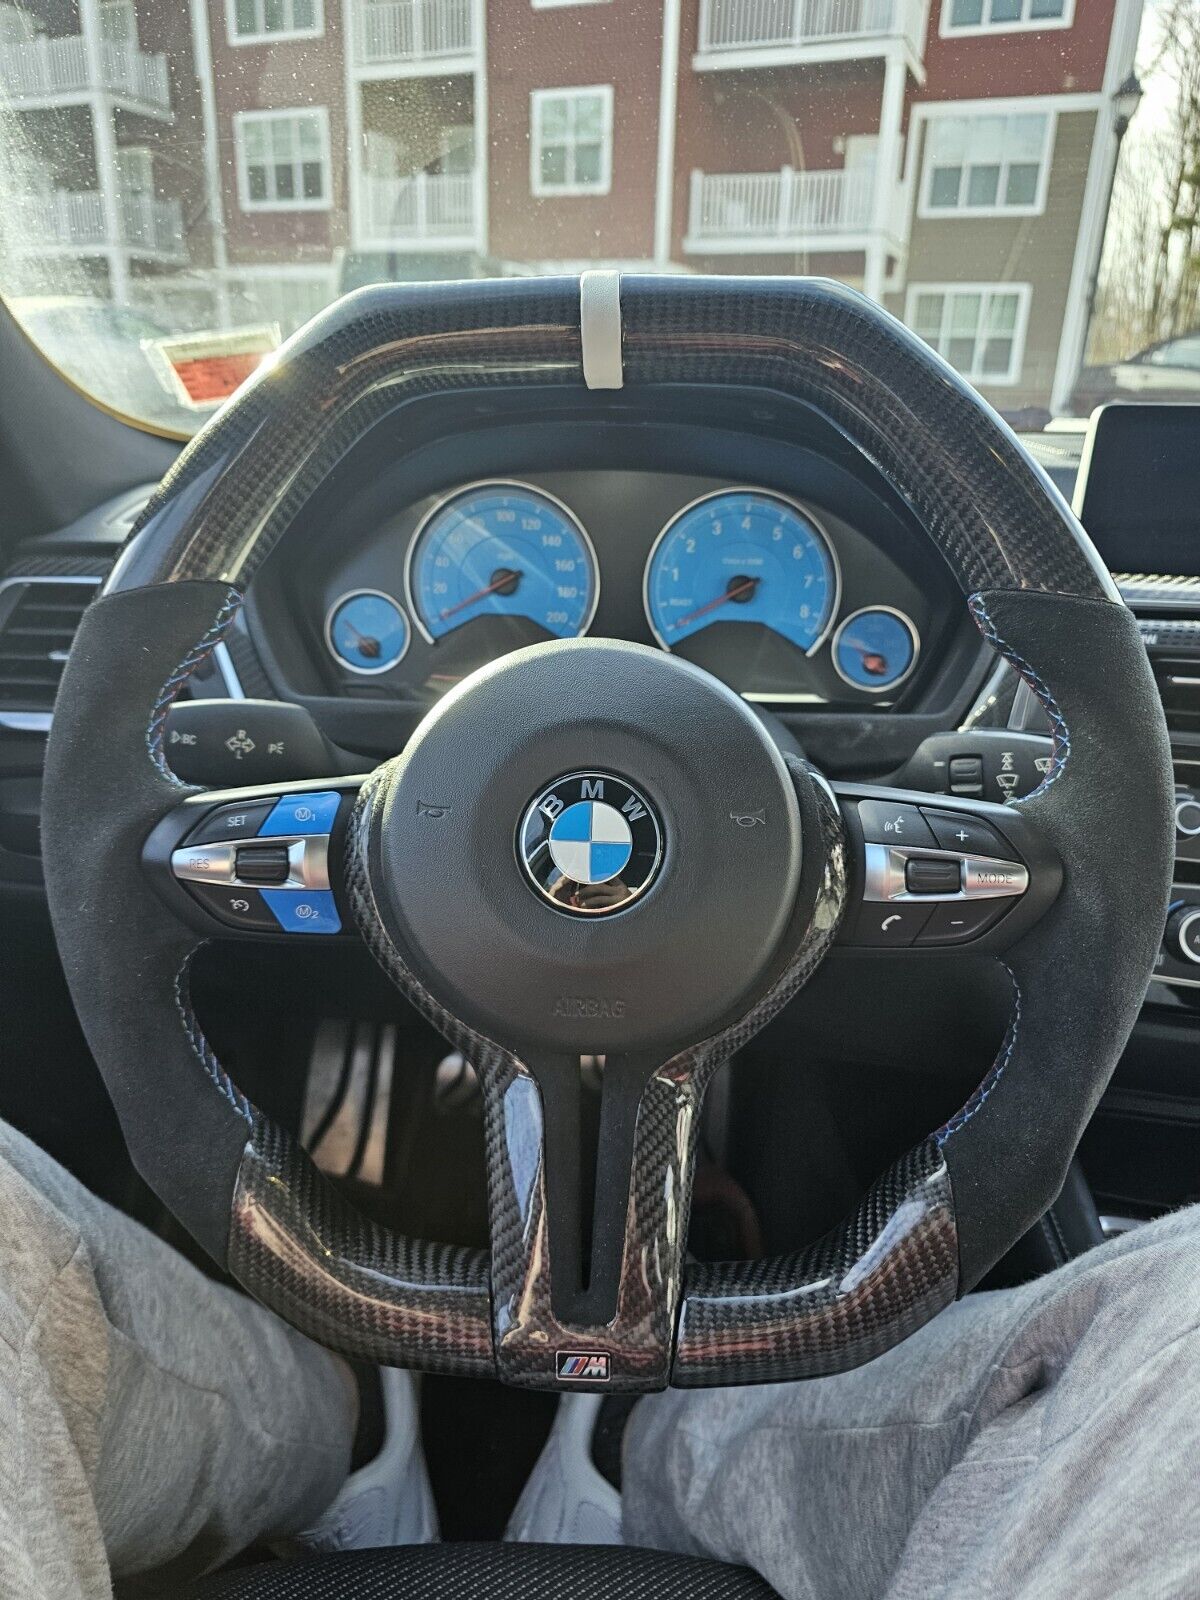 100%Real Carbon Fiber Steering Wheel For BMW F80 F82 F30 X5 M1 M2 M3 M4 M5